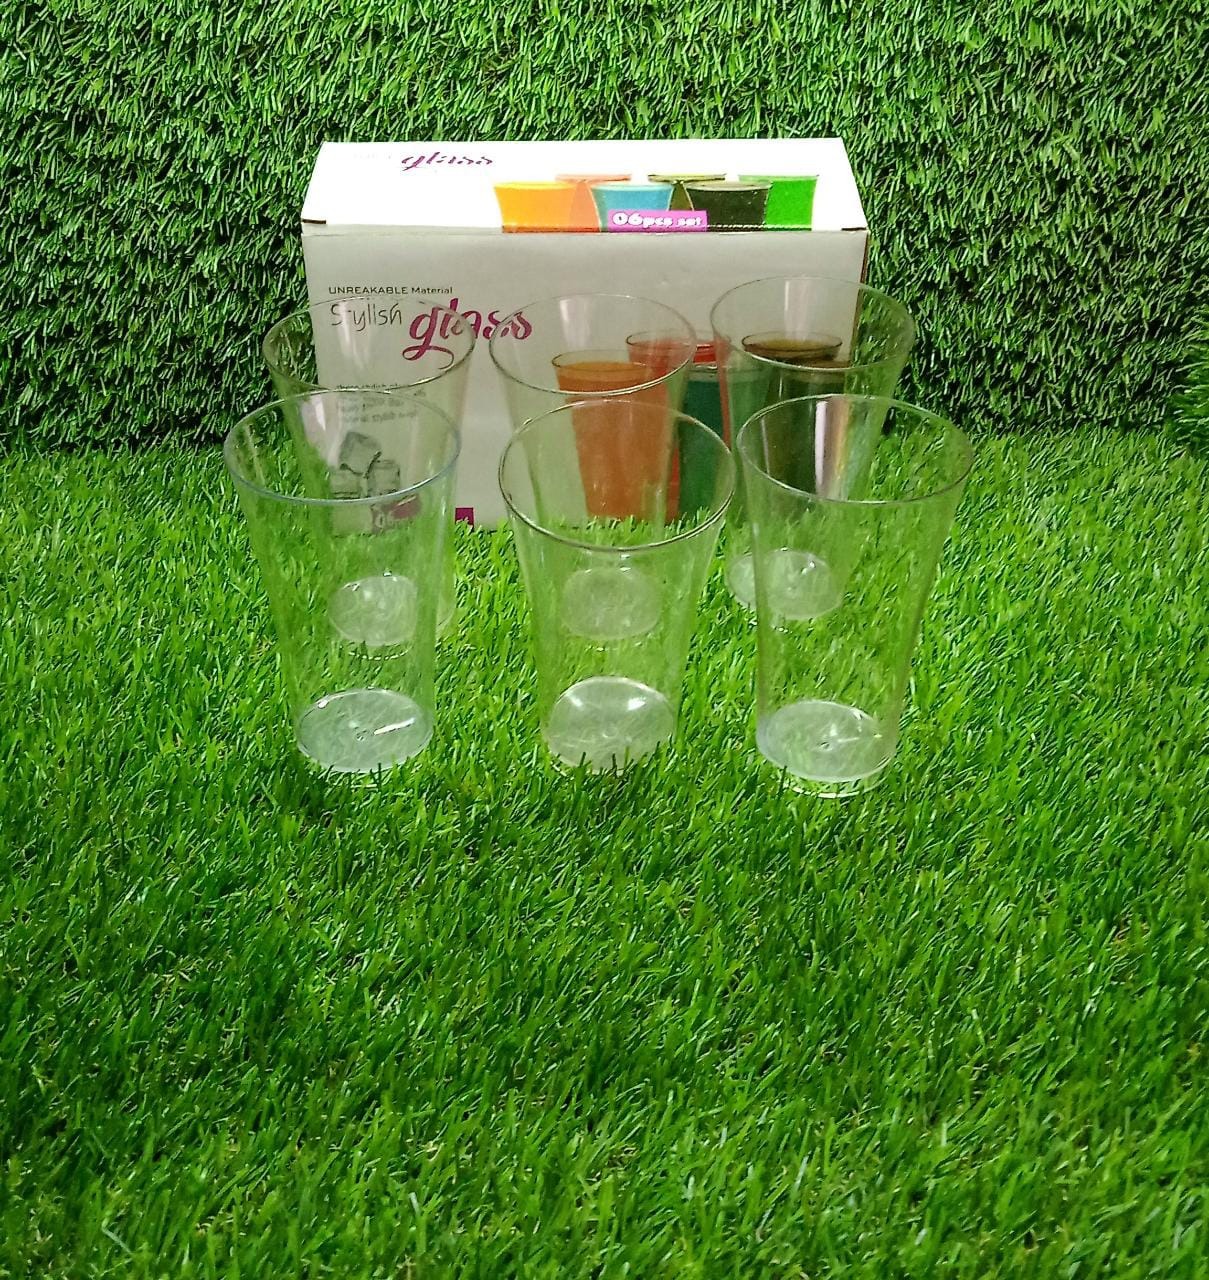 2849 Drinking Glass Juice Glass Water Glass Set of 6 Transparent Glass DeoDap